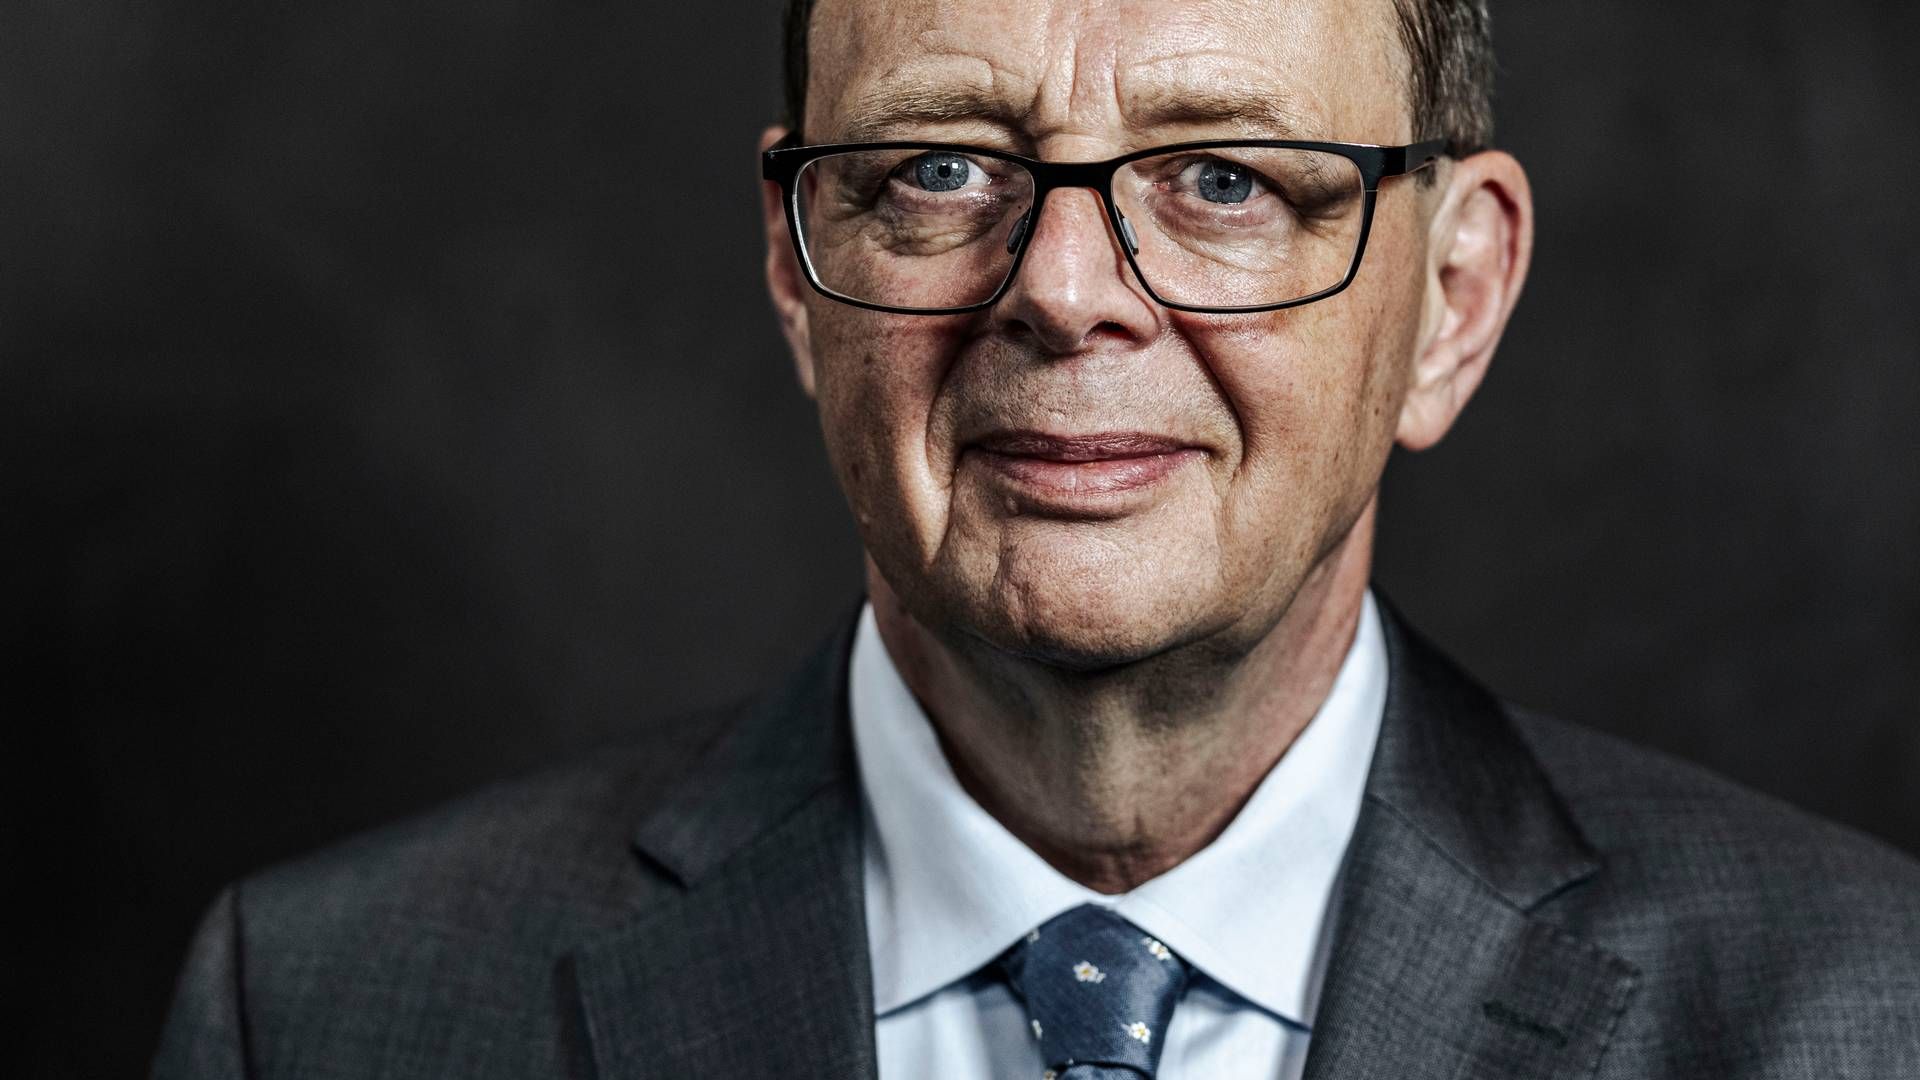 Nationalbankdirektør Christian Kettel Thomsen. | Foto: Thomas Traasdahl